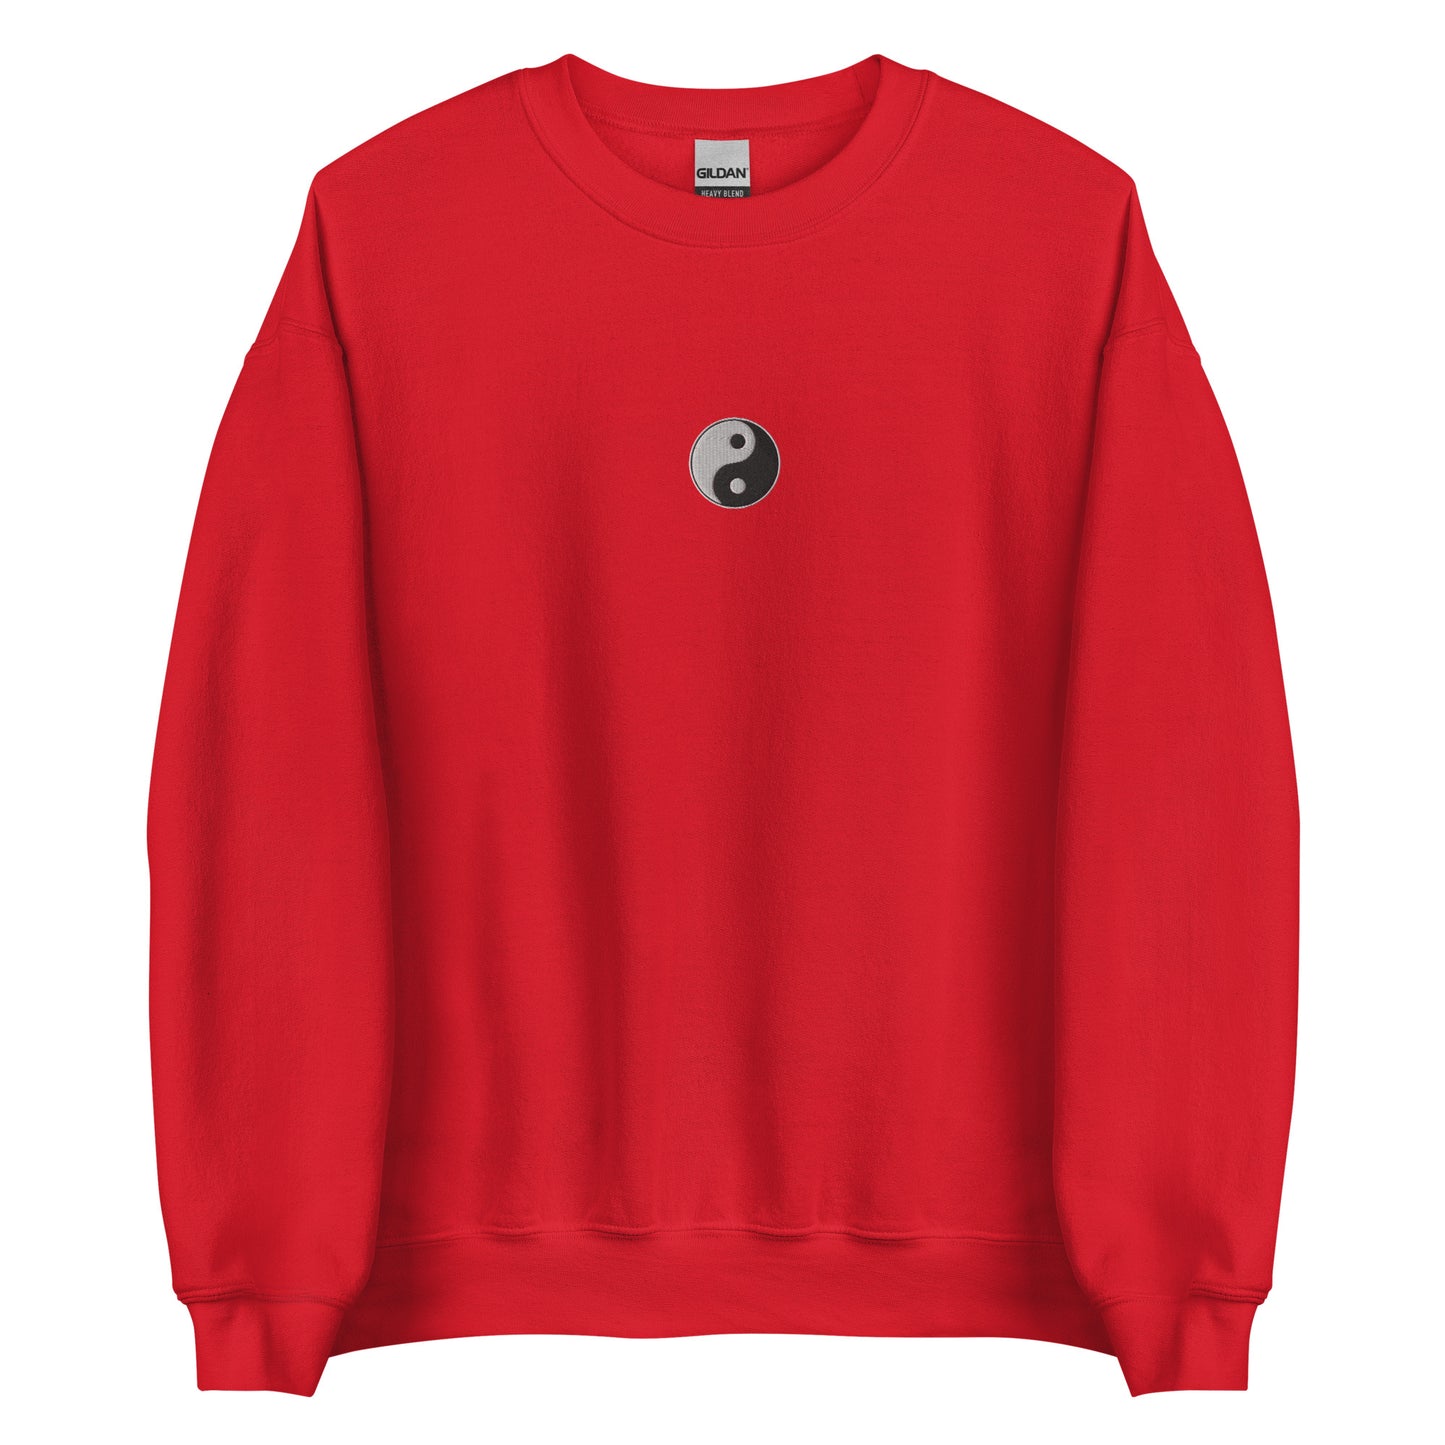 Yin Yang Embroidered Sweatshirt Unisex, Japan, Japanese Clothing, Aesthetic, Sweater, Men/Women/Girl/Boy, Gift, Harajuku, Asian